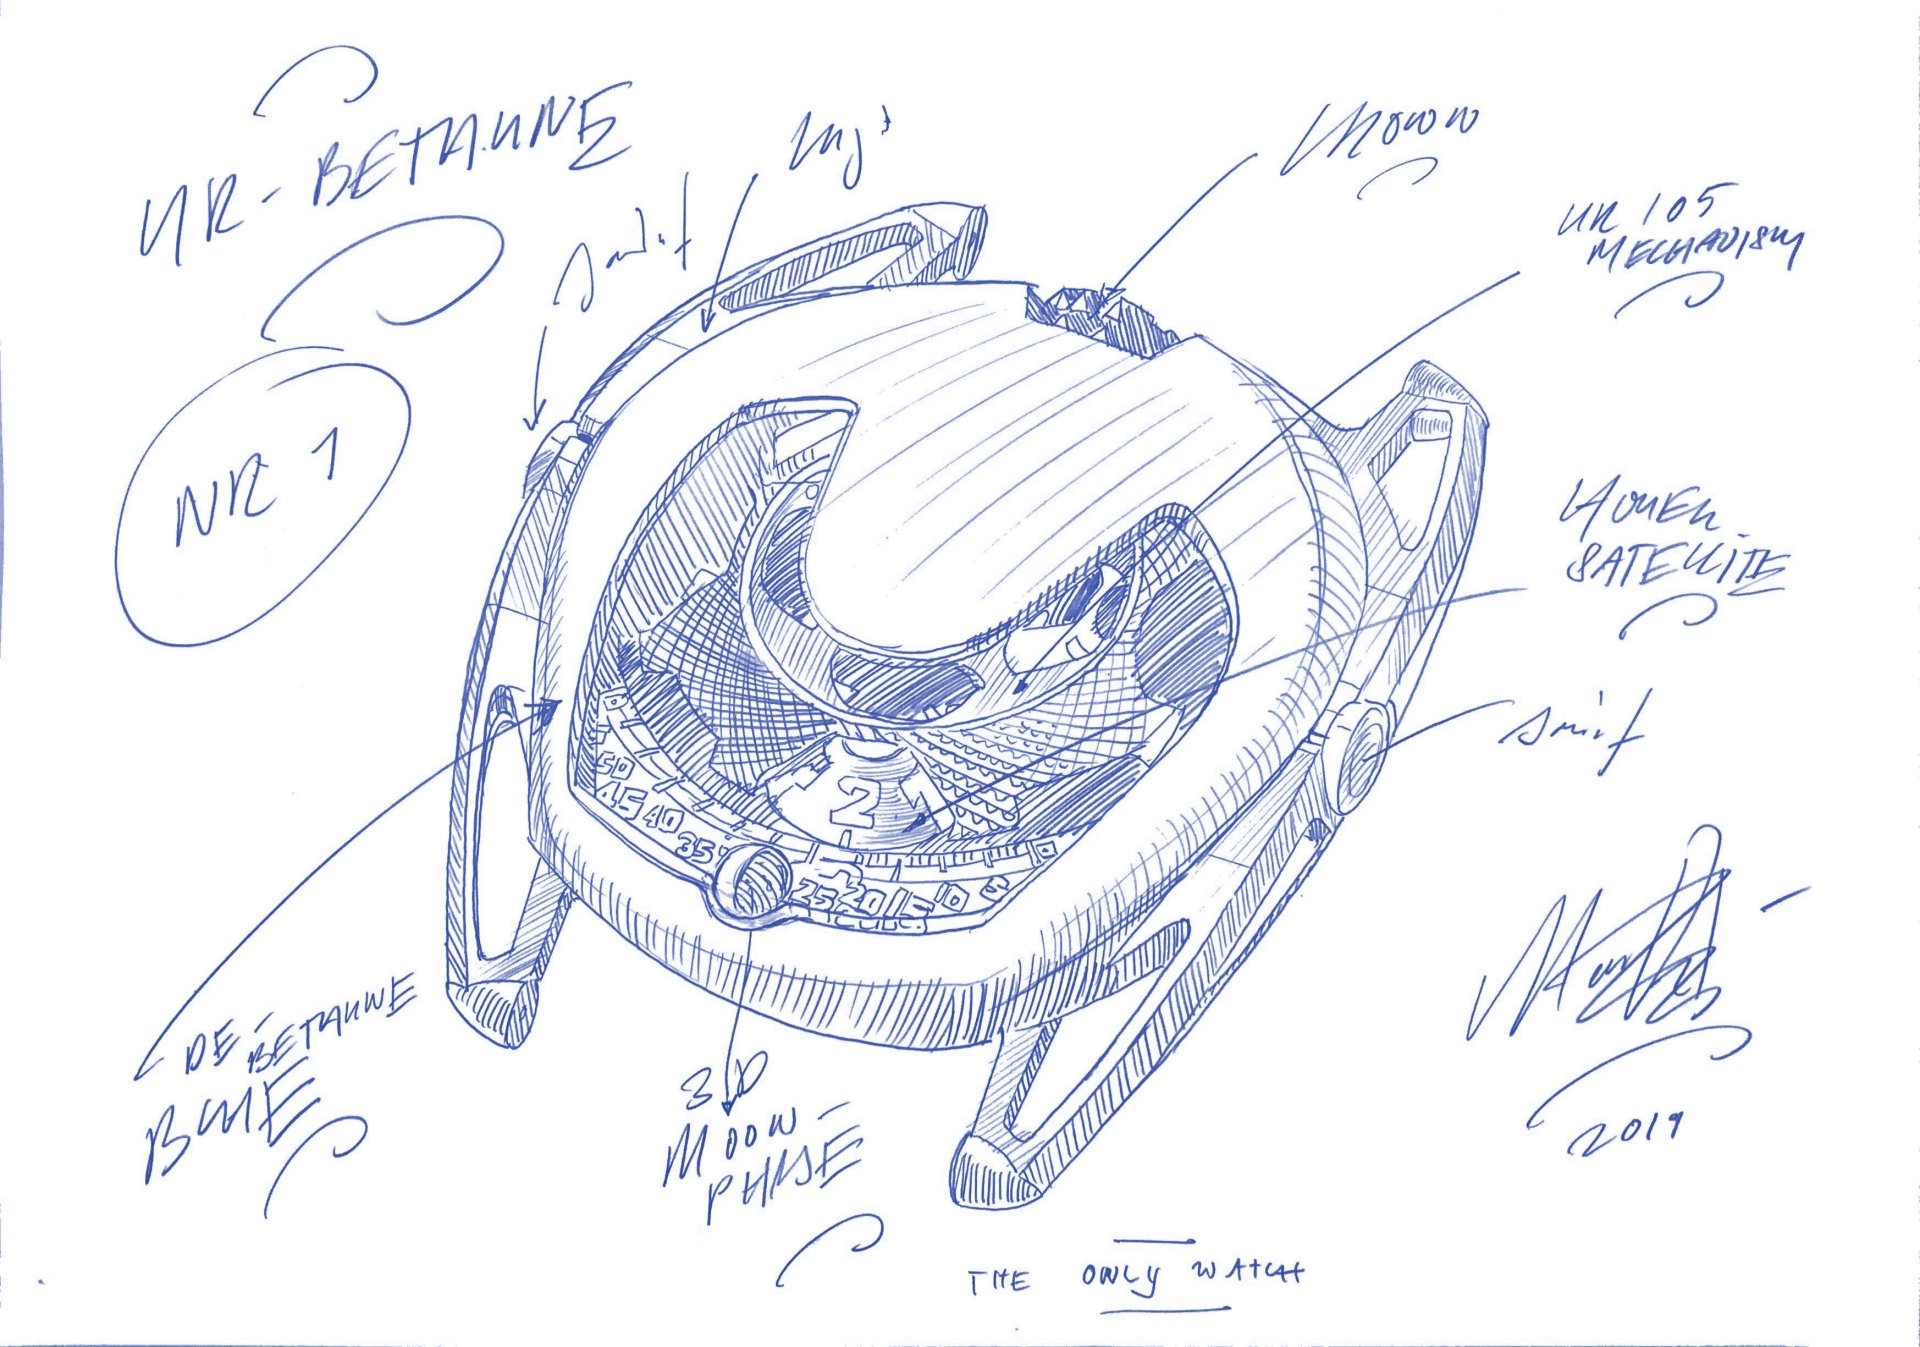 De Bethune X Urwerk Moon Satellite Only Watch 2019 concept sketch